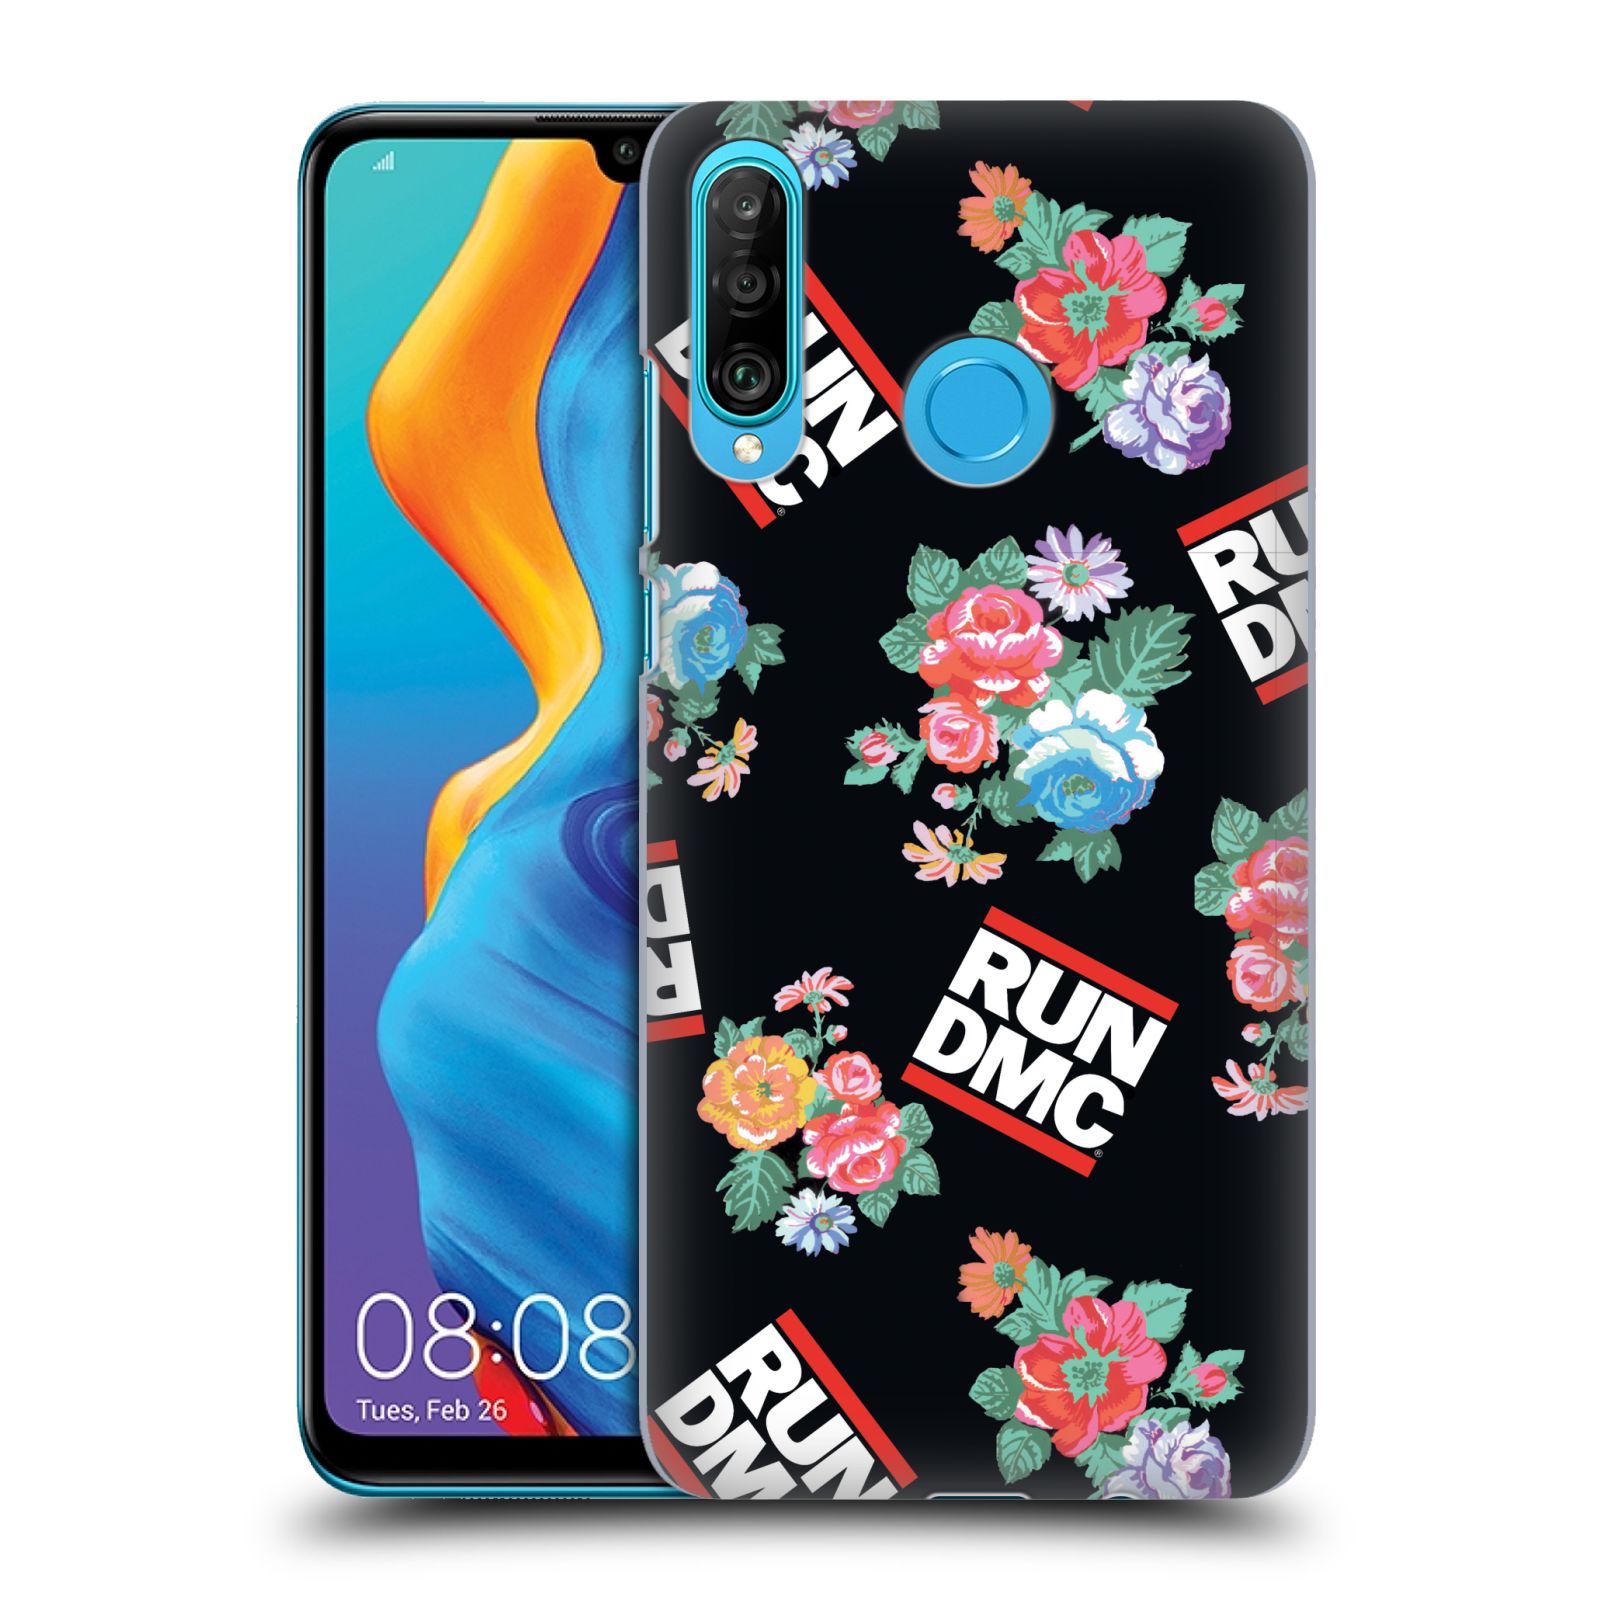 Pouzdro na mobil Huawei P30 LITE - HEAD CASE - rapová kapela Run DMC květiny černé pozadí